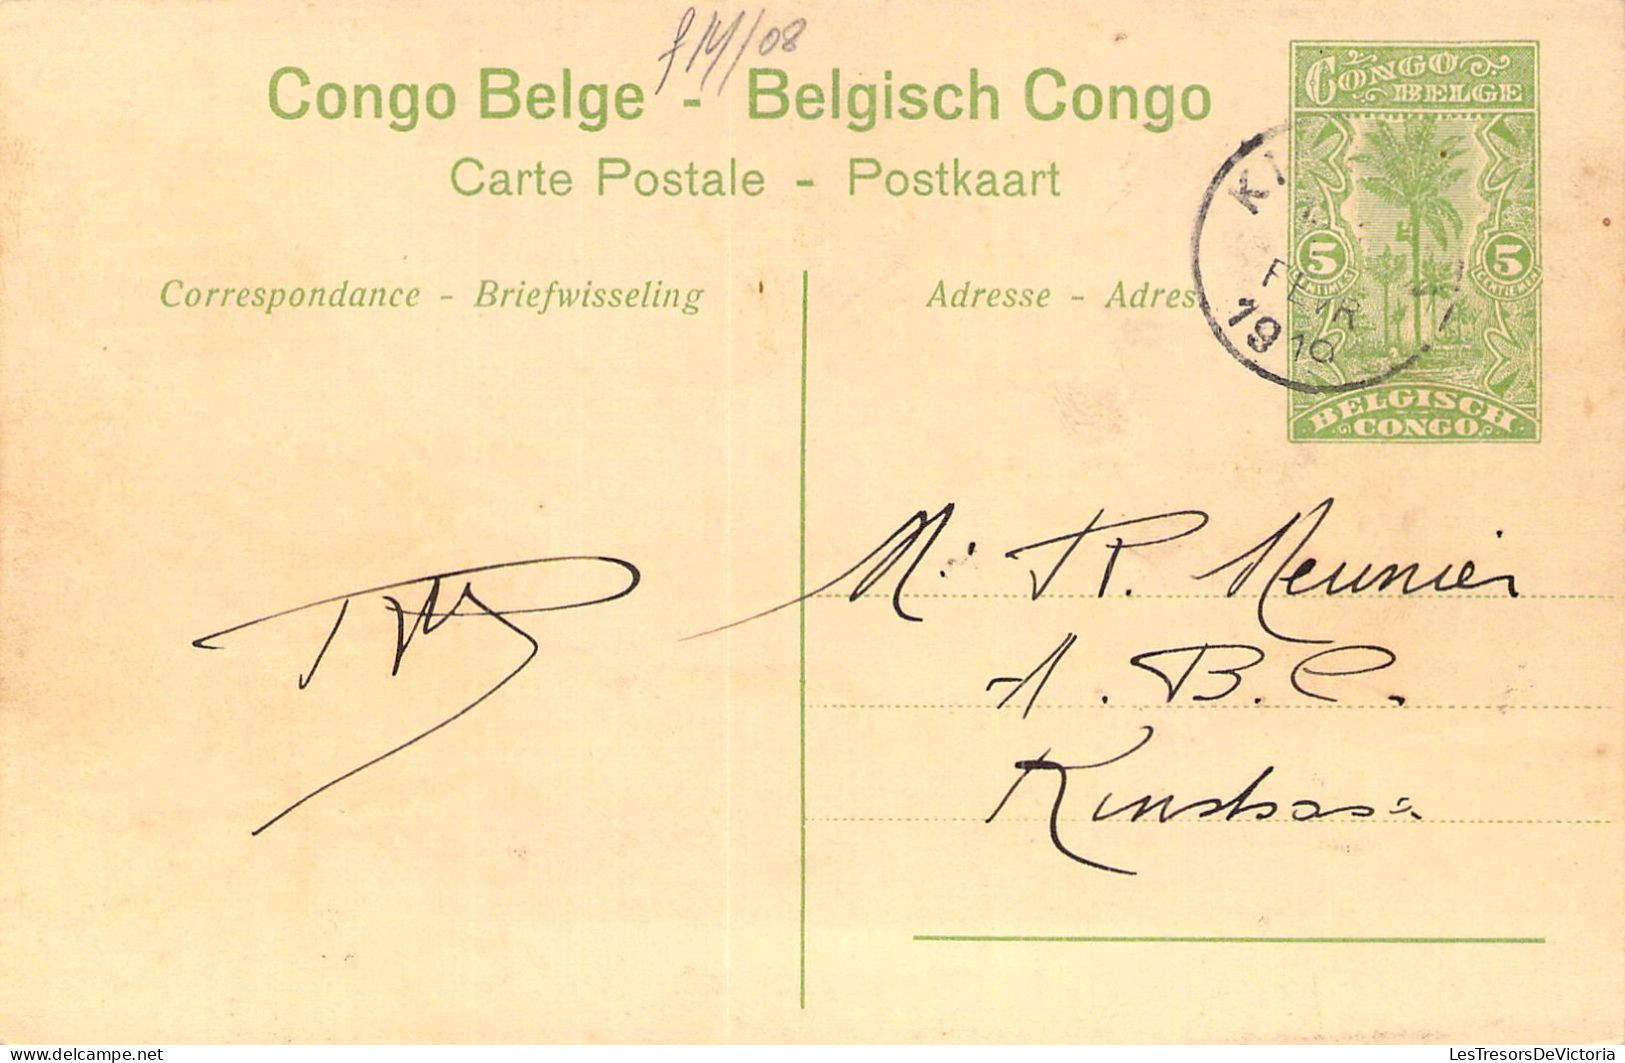 CONGO BELGE - Shinkakasa - Steamer Chargeant Des Galets - Carte Postale Ancienne - Belgian Congo